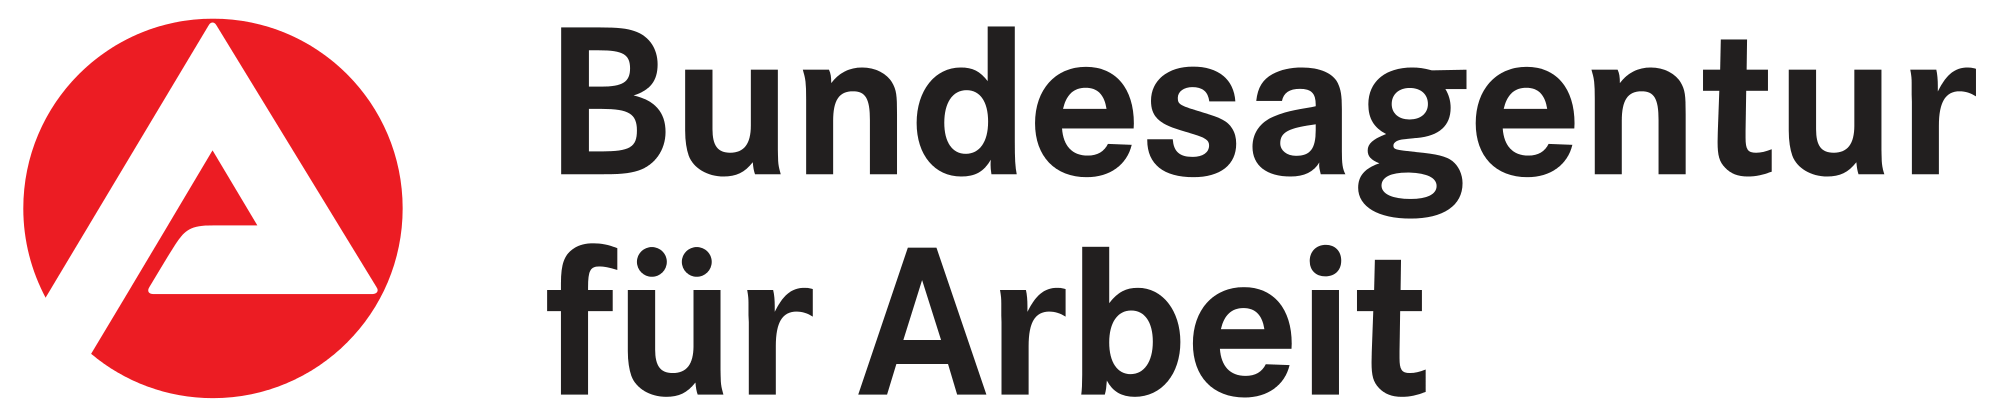 Bundesagentur für Arbeit Logo